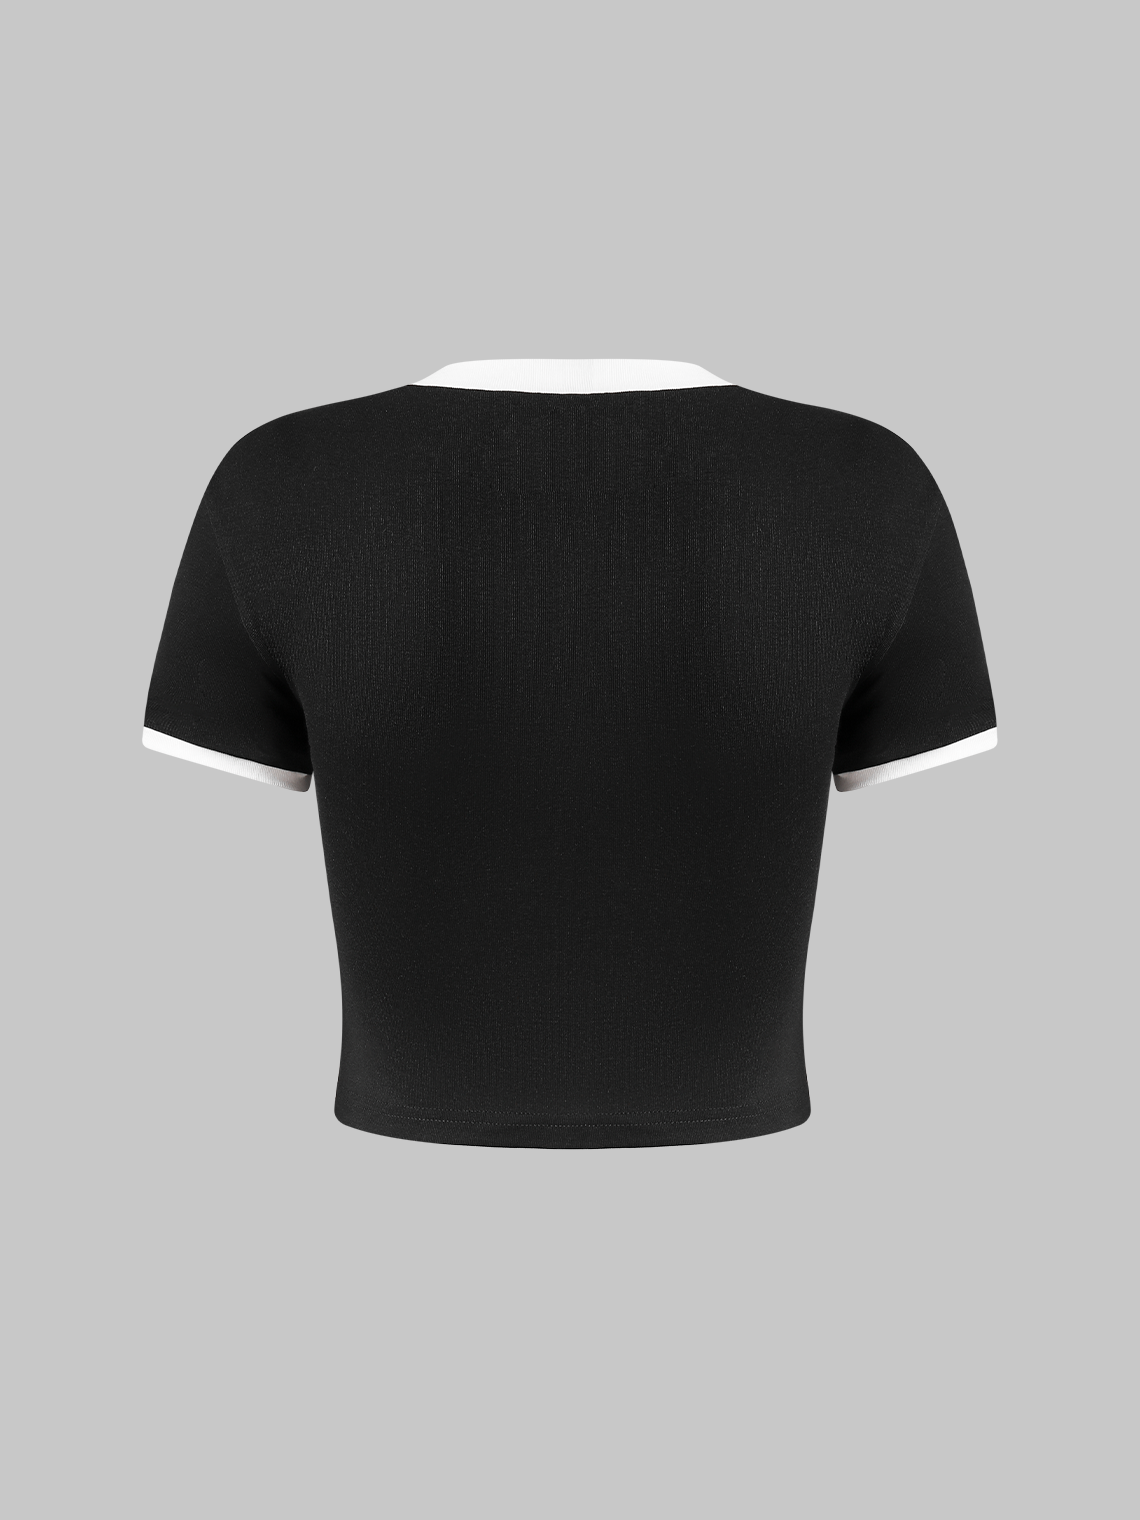 【Final Sale】Street Black-white Tchwork Colorblock Top T-Shirt